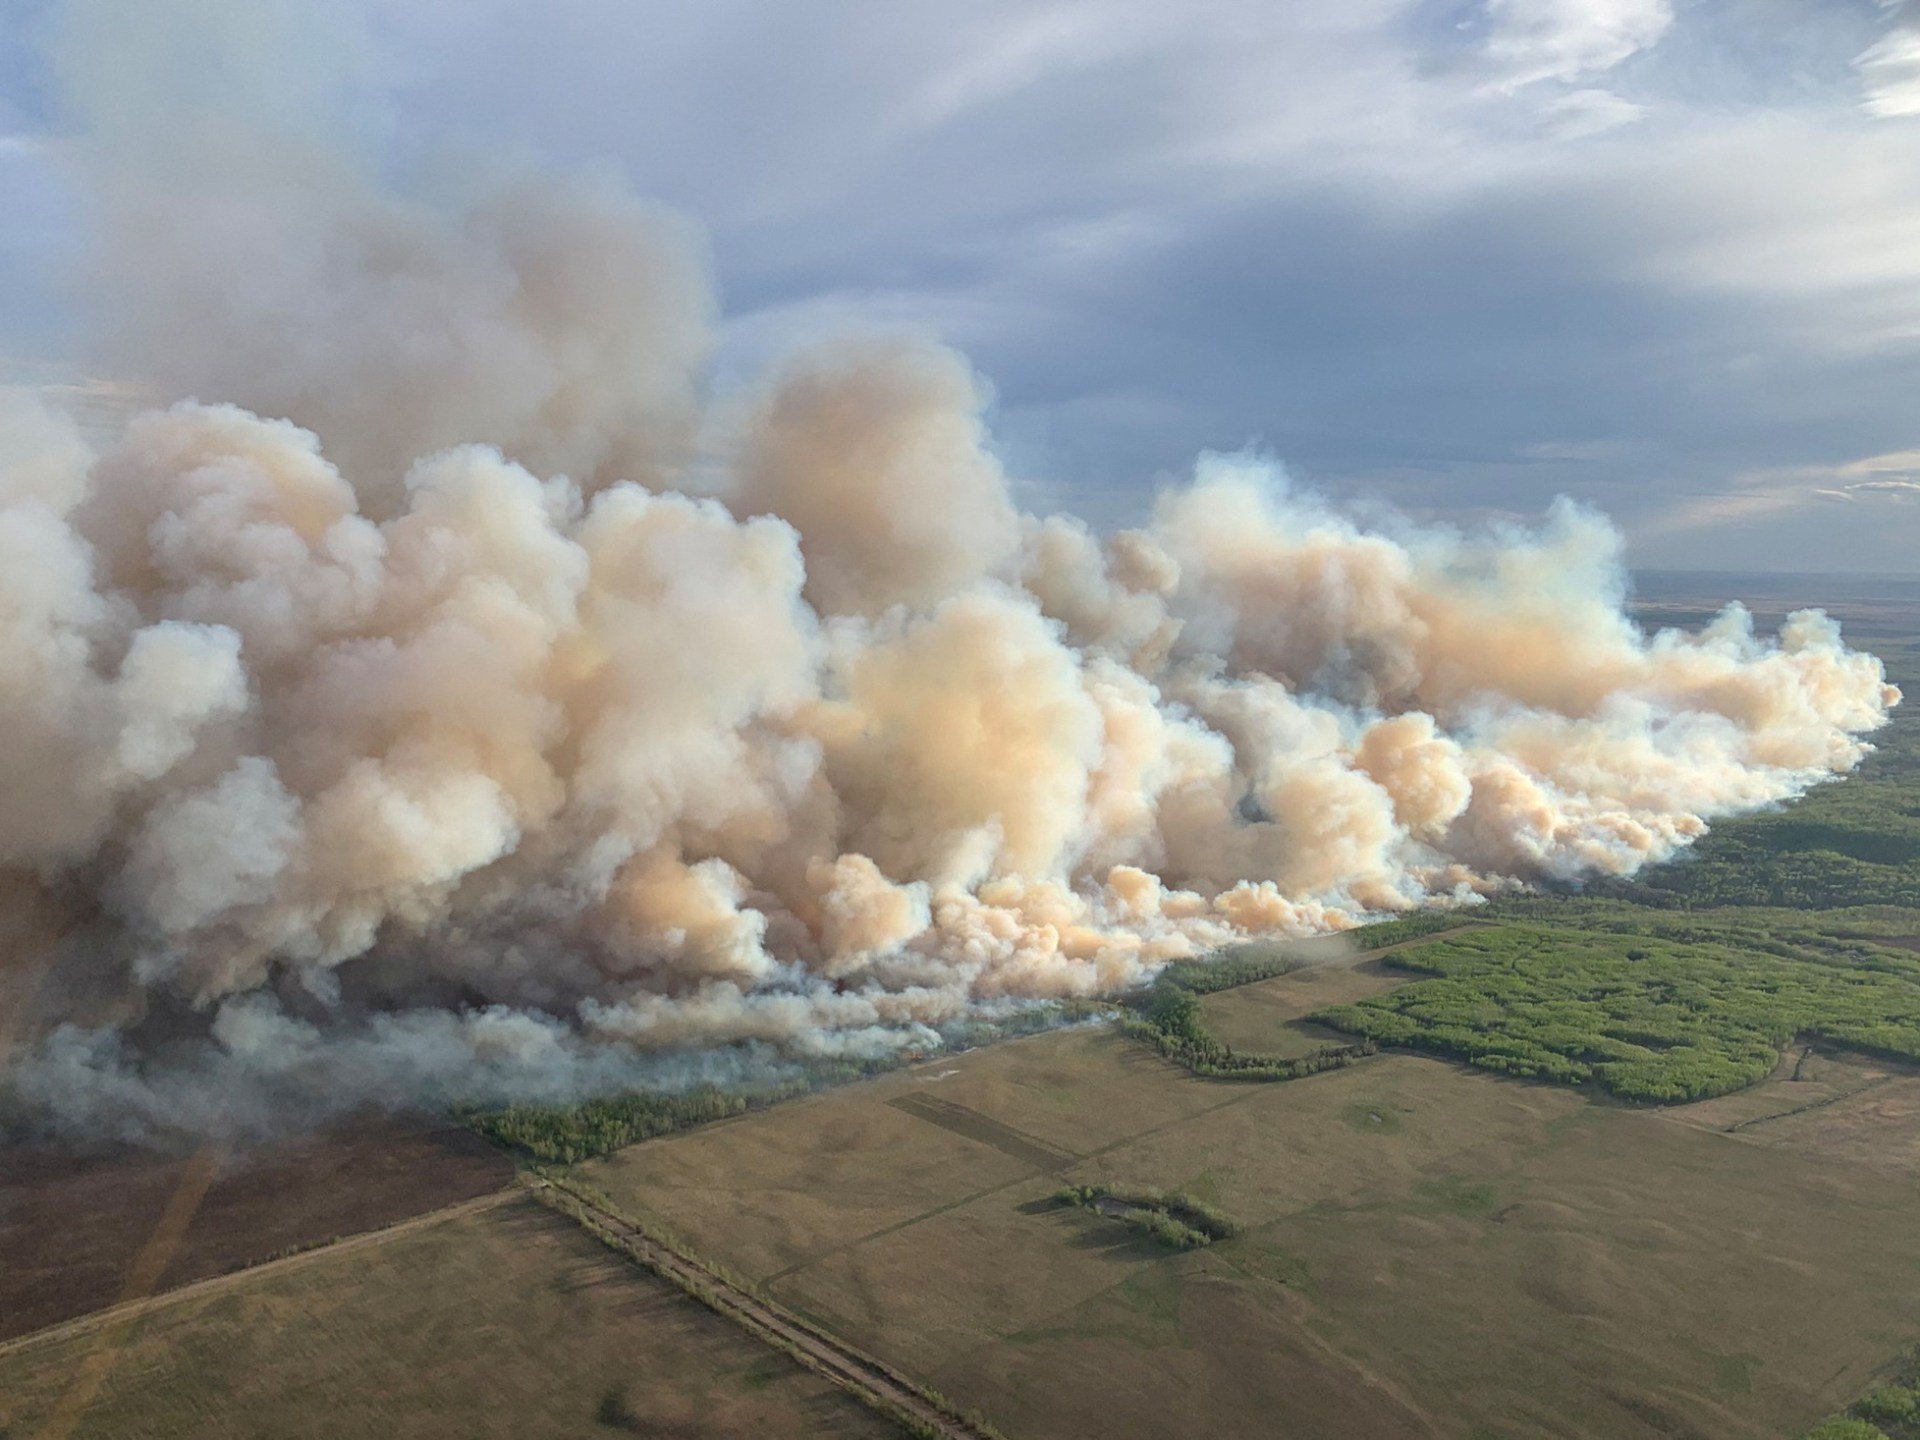 Wildfires spread across western Canada